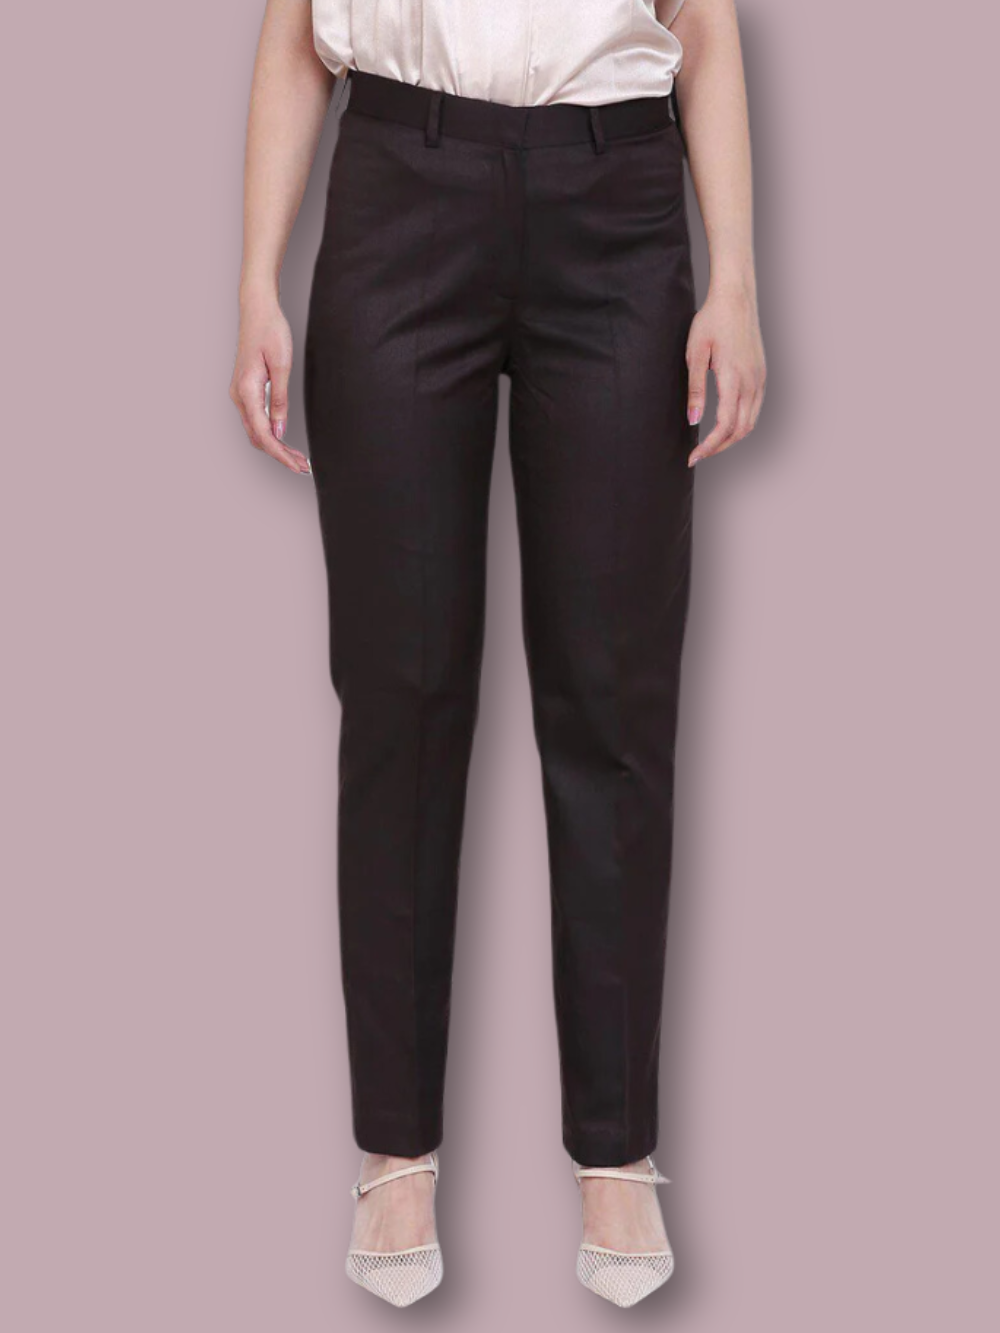 Buy INDIBELLE Women's Smart Regular Fit Peg Trousers (Brown 30) at Amazon.in